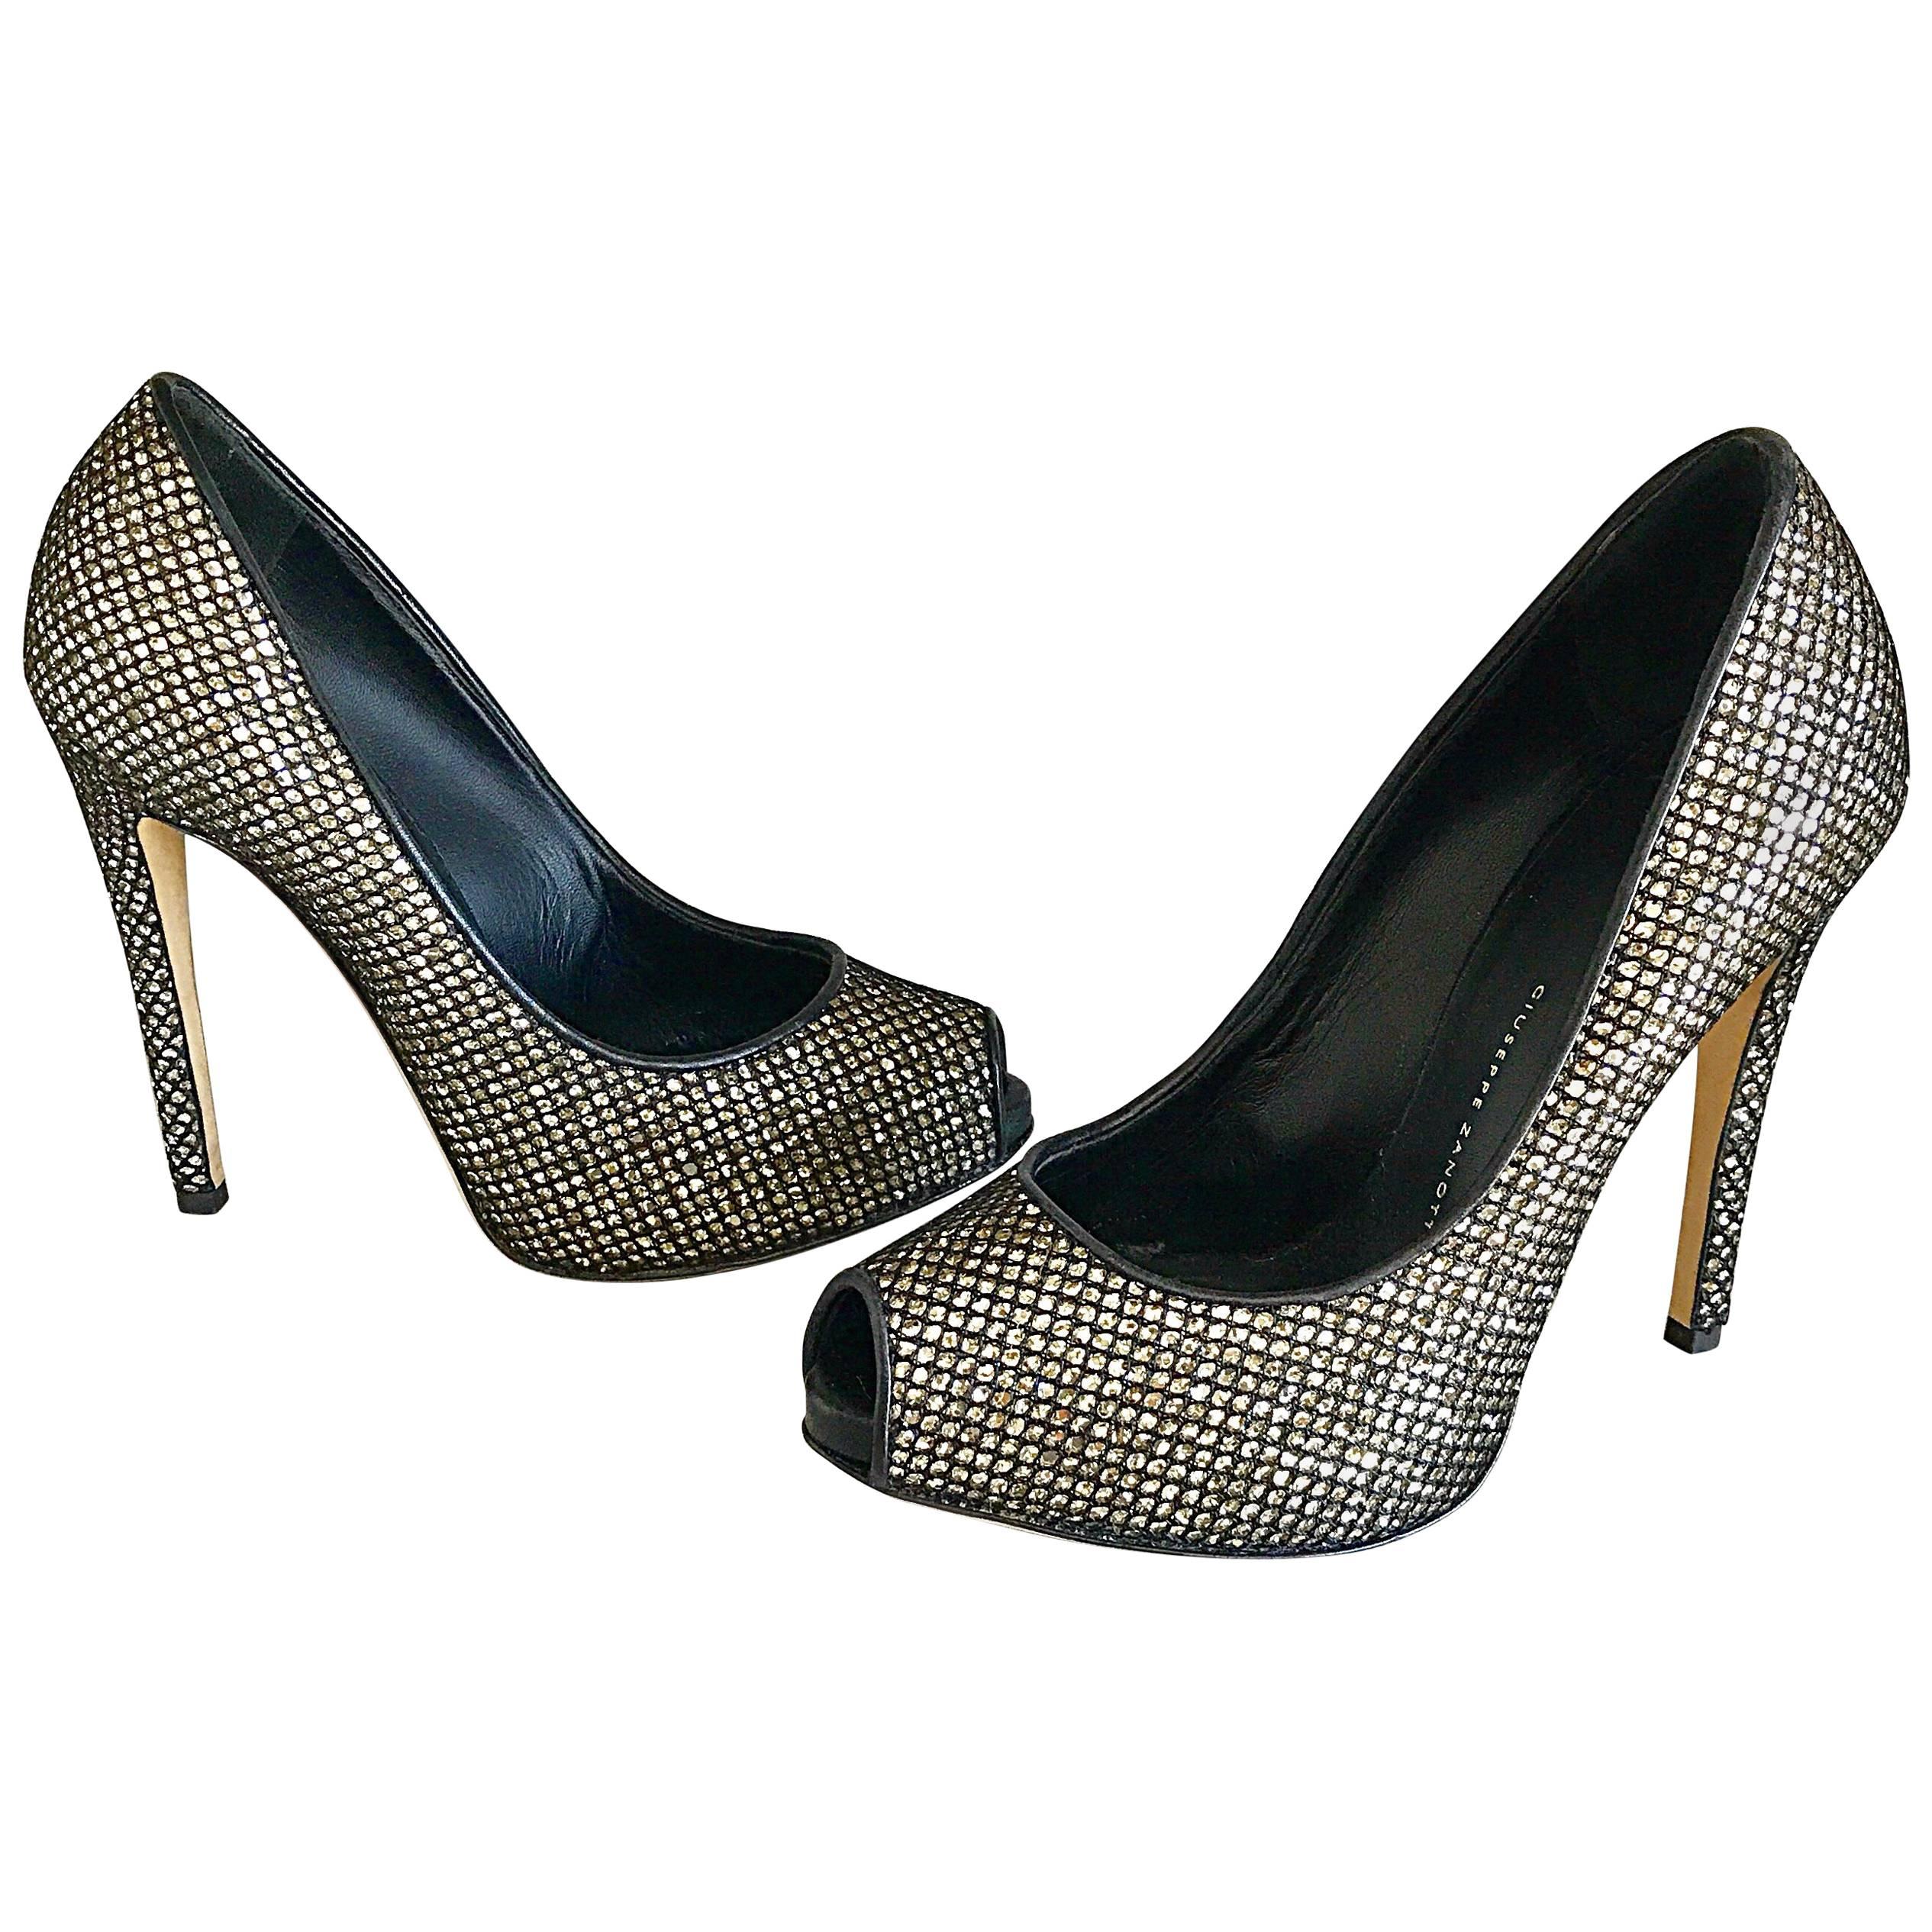 Giuseppe Zanotti Black and Silver Glitter Size 37 / 7 Peep Toe Shoes High Heels 